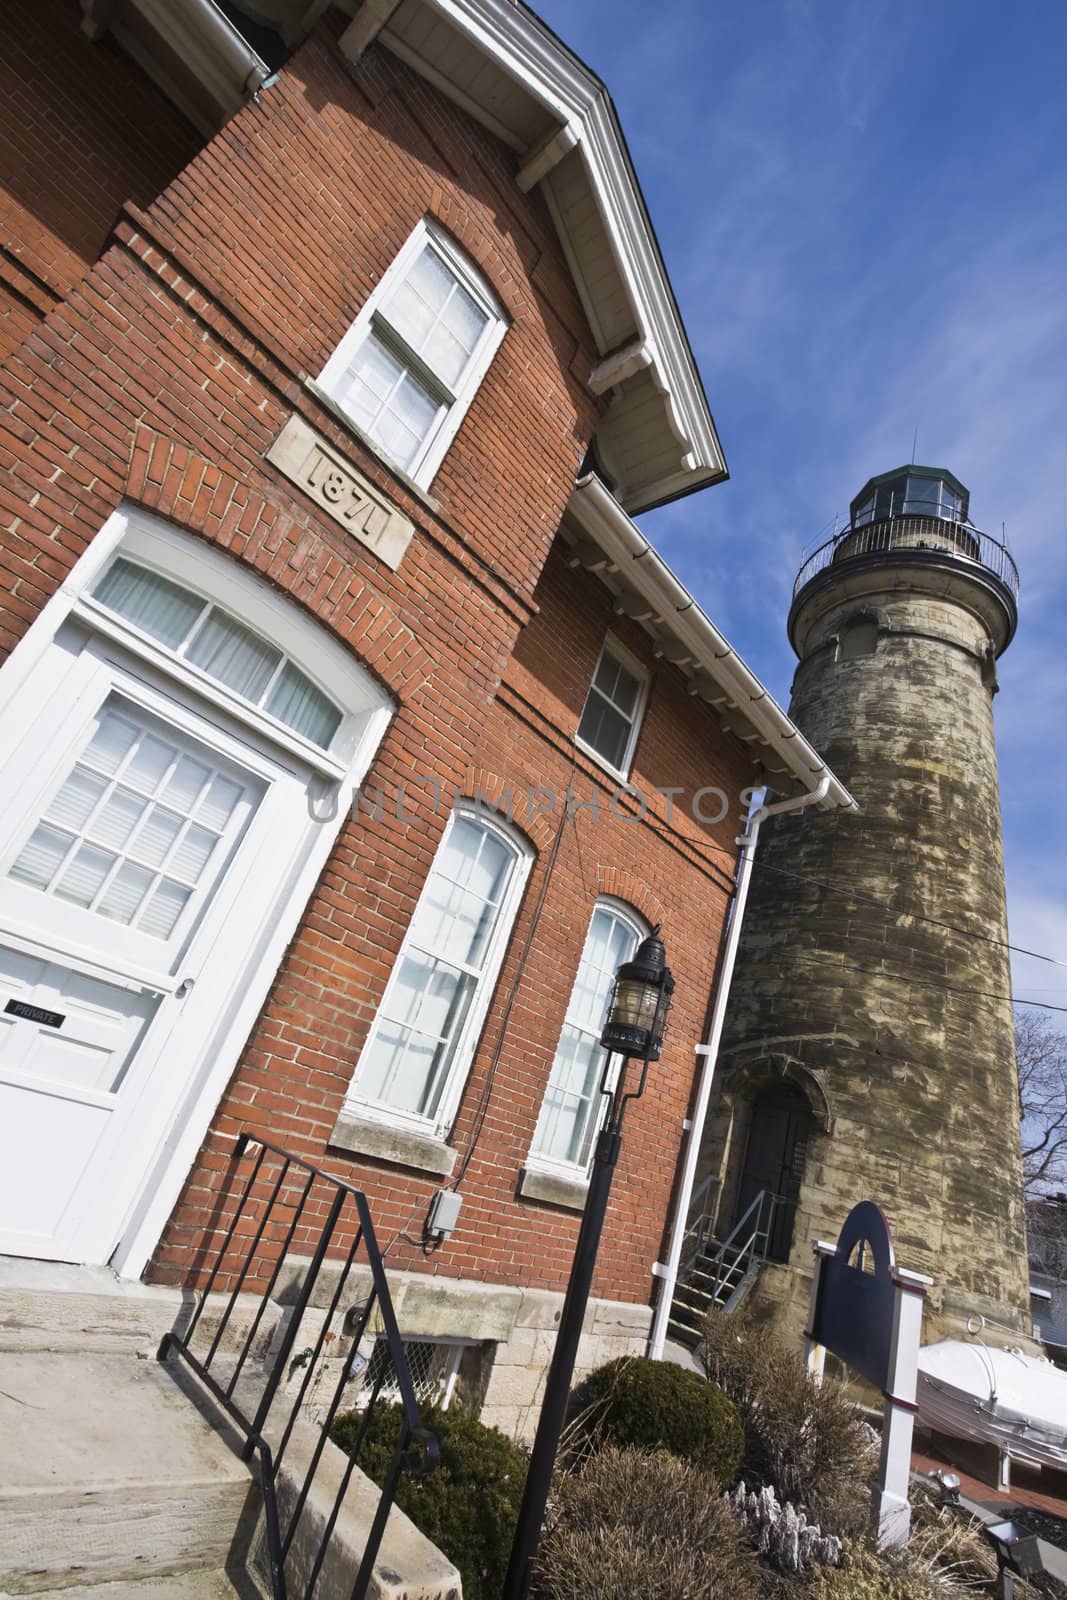 Old Lighthouse in Fairport, Ohio.